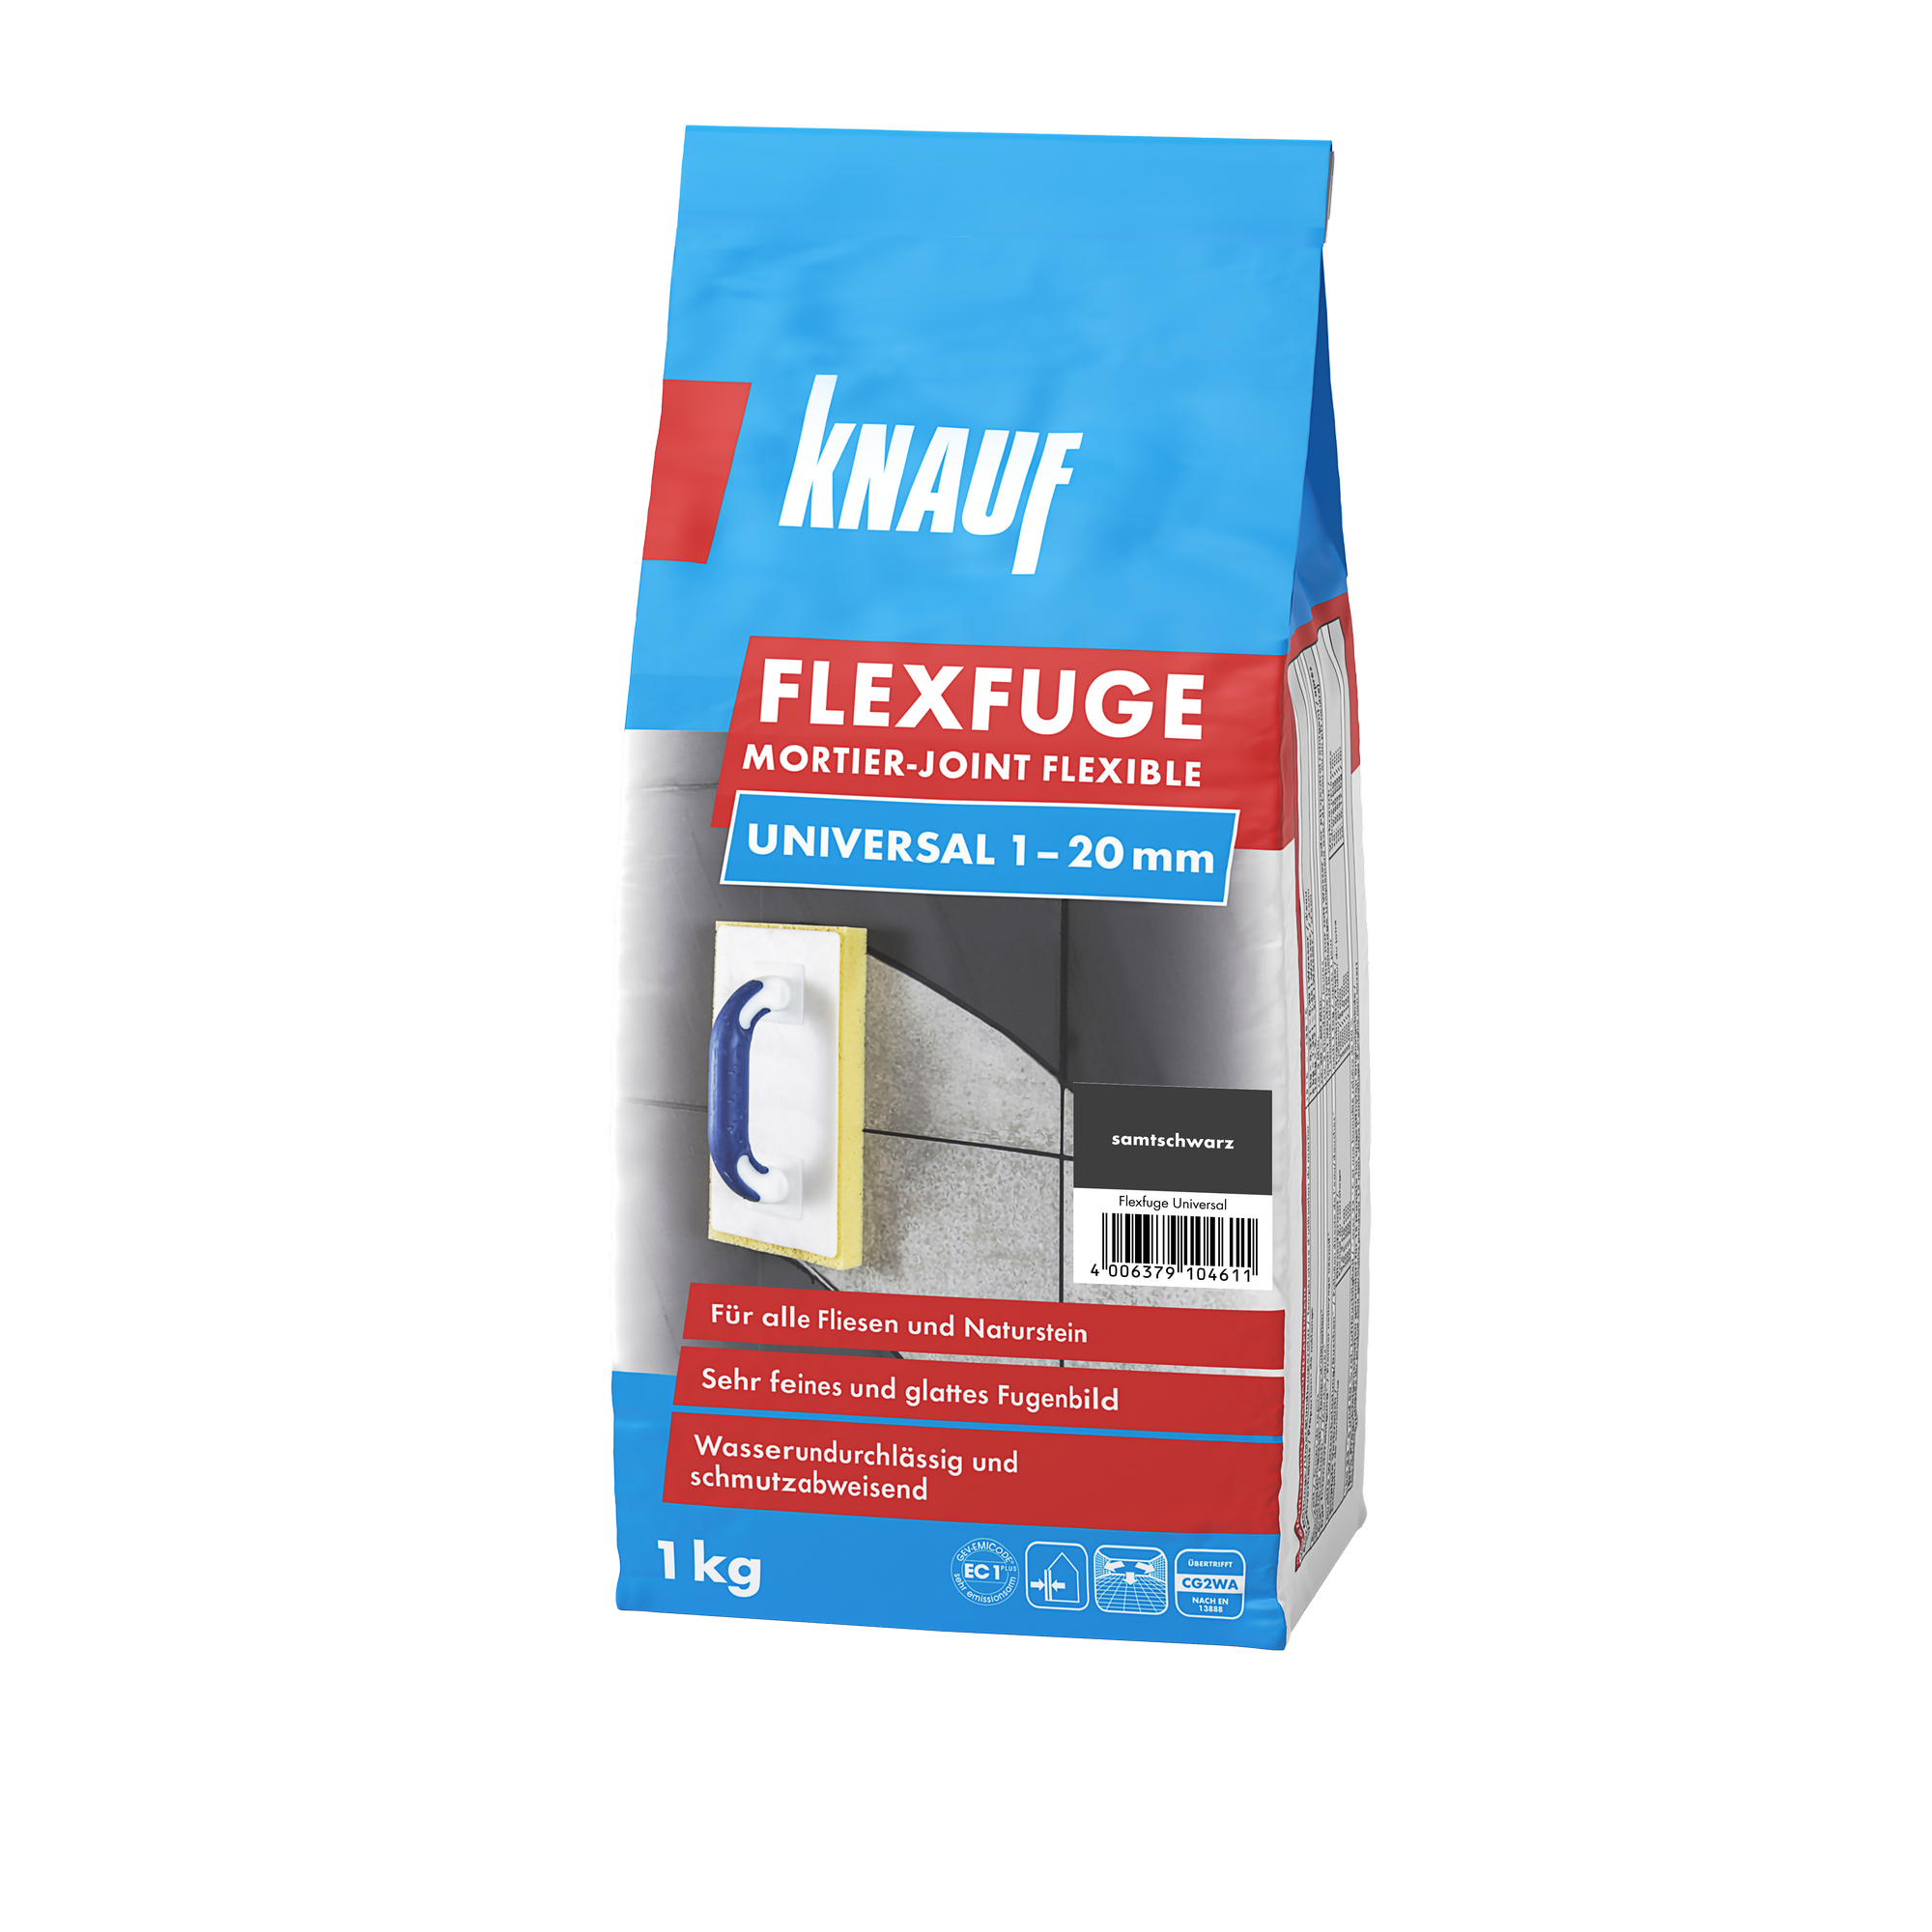 Flexfuge 'Universal' samtschwarz 1 kg + product picture